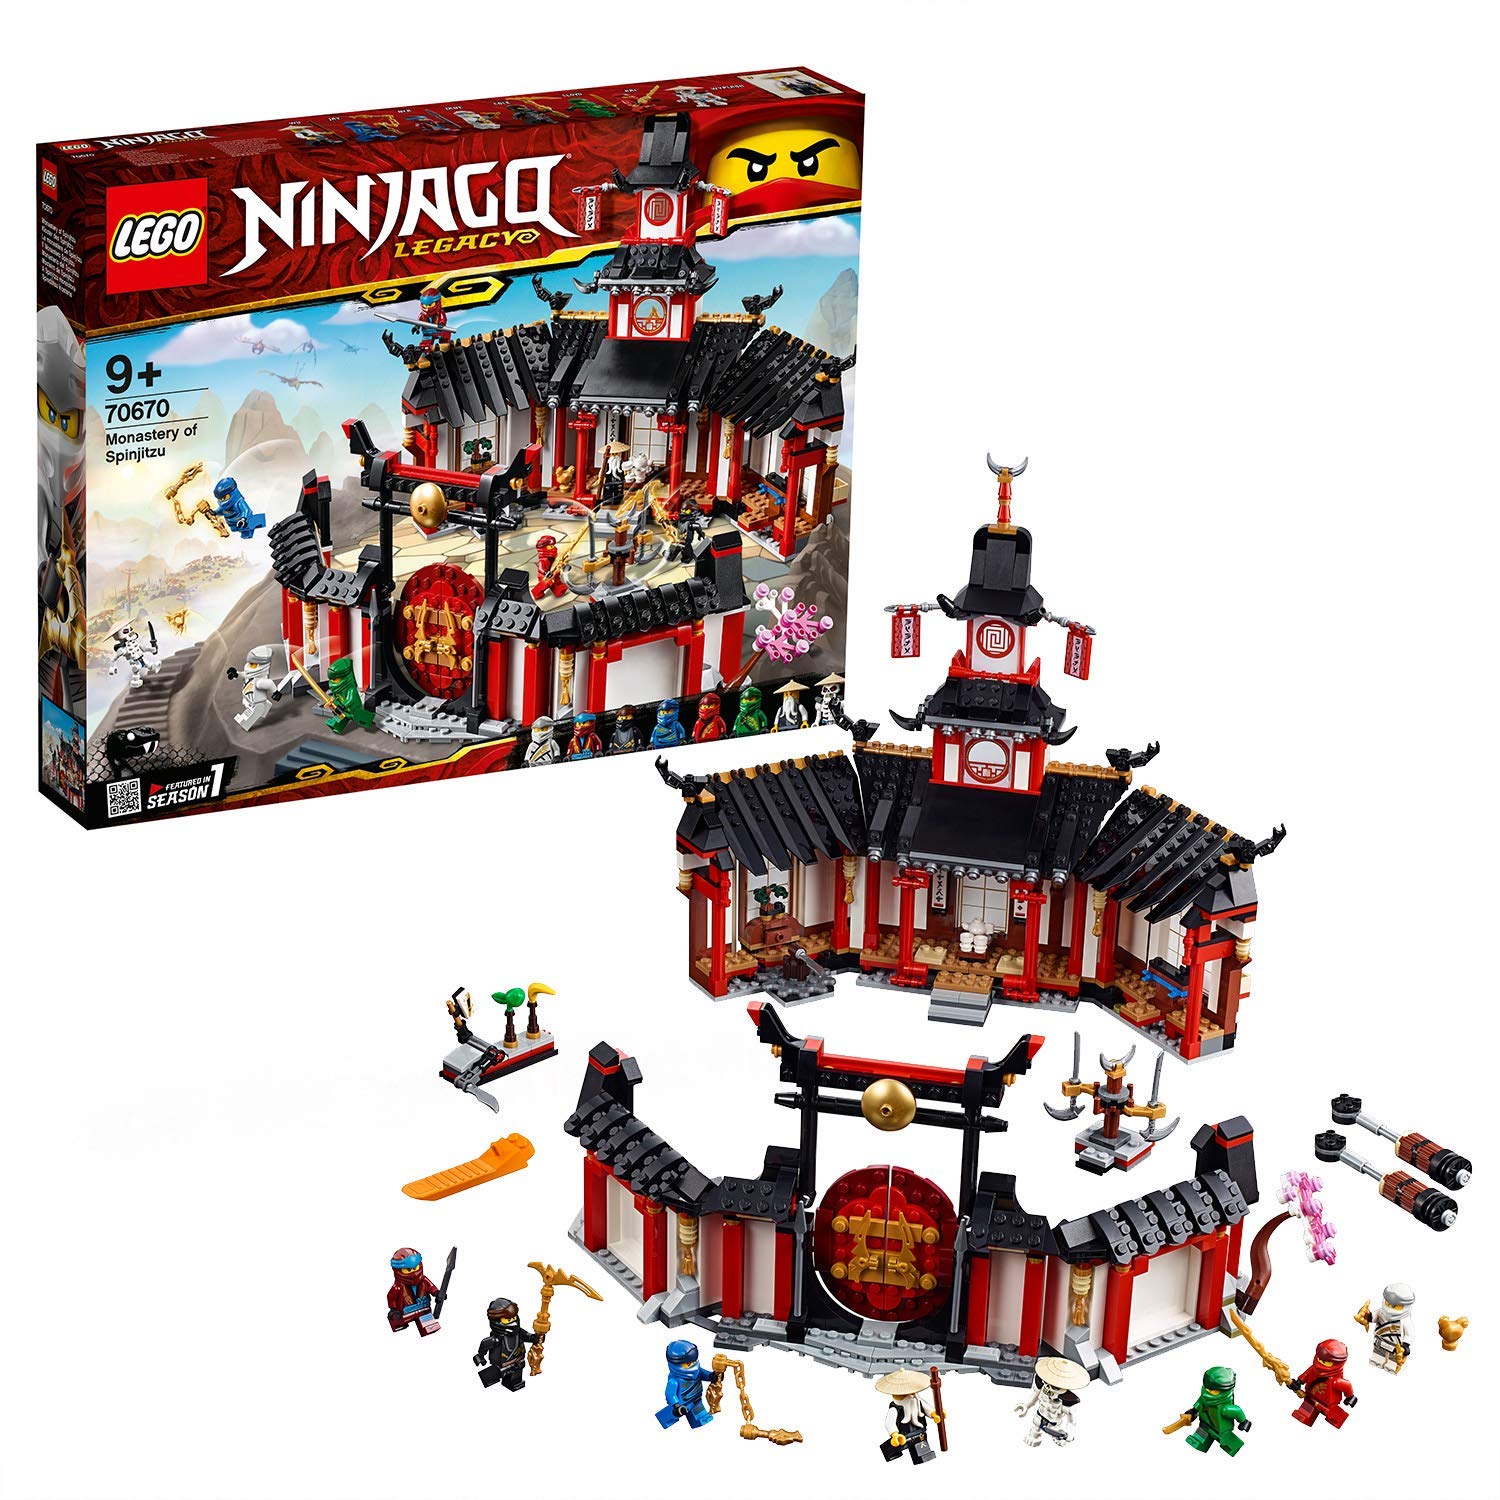 LEGO 70670 NINJAGO Kloster des Spinjitzu, Bauset mit Ninja Minifiguren für Sammler